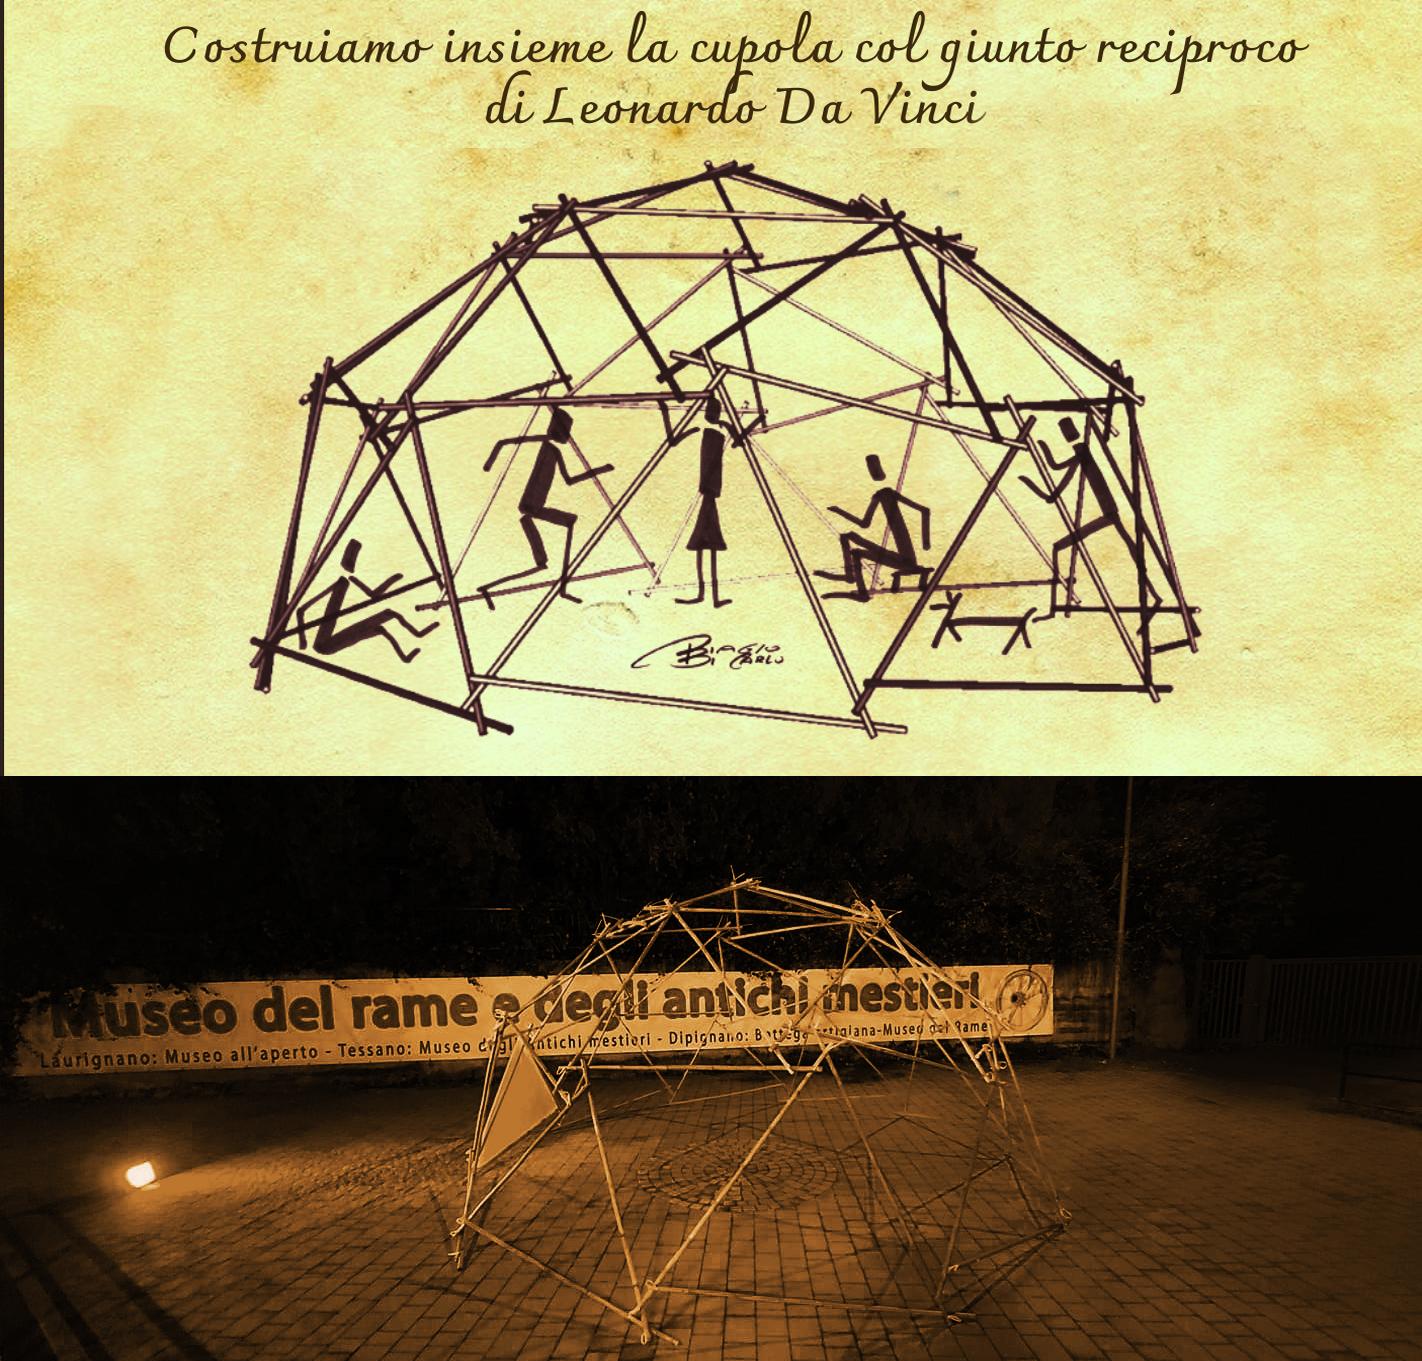 Image for entry 'Dome built using Leonardo da Vinci reciprocal frame joint'